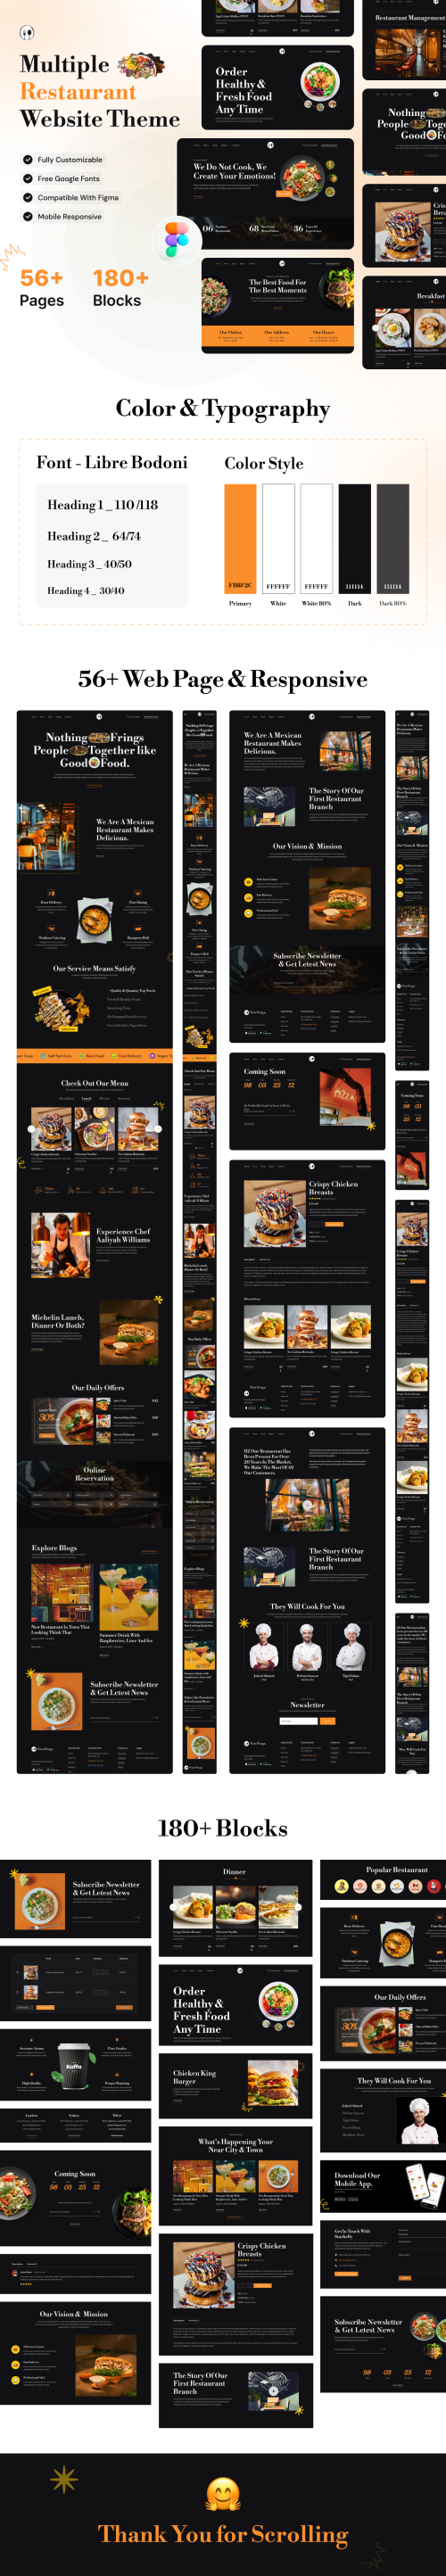 UIHut - Multiple Restaurant Website Theme - 25265